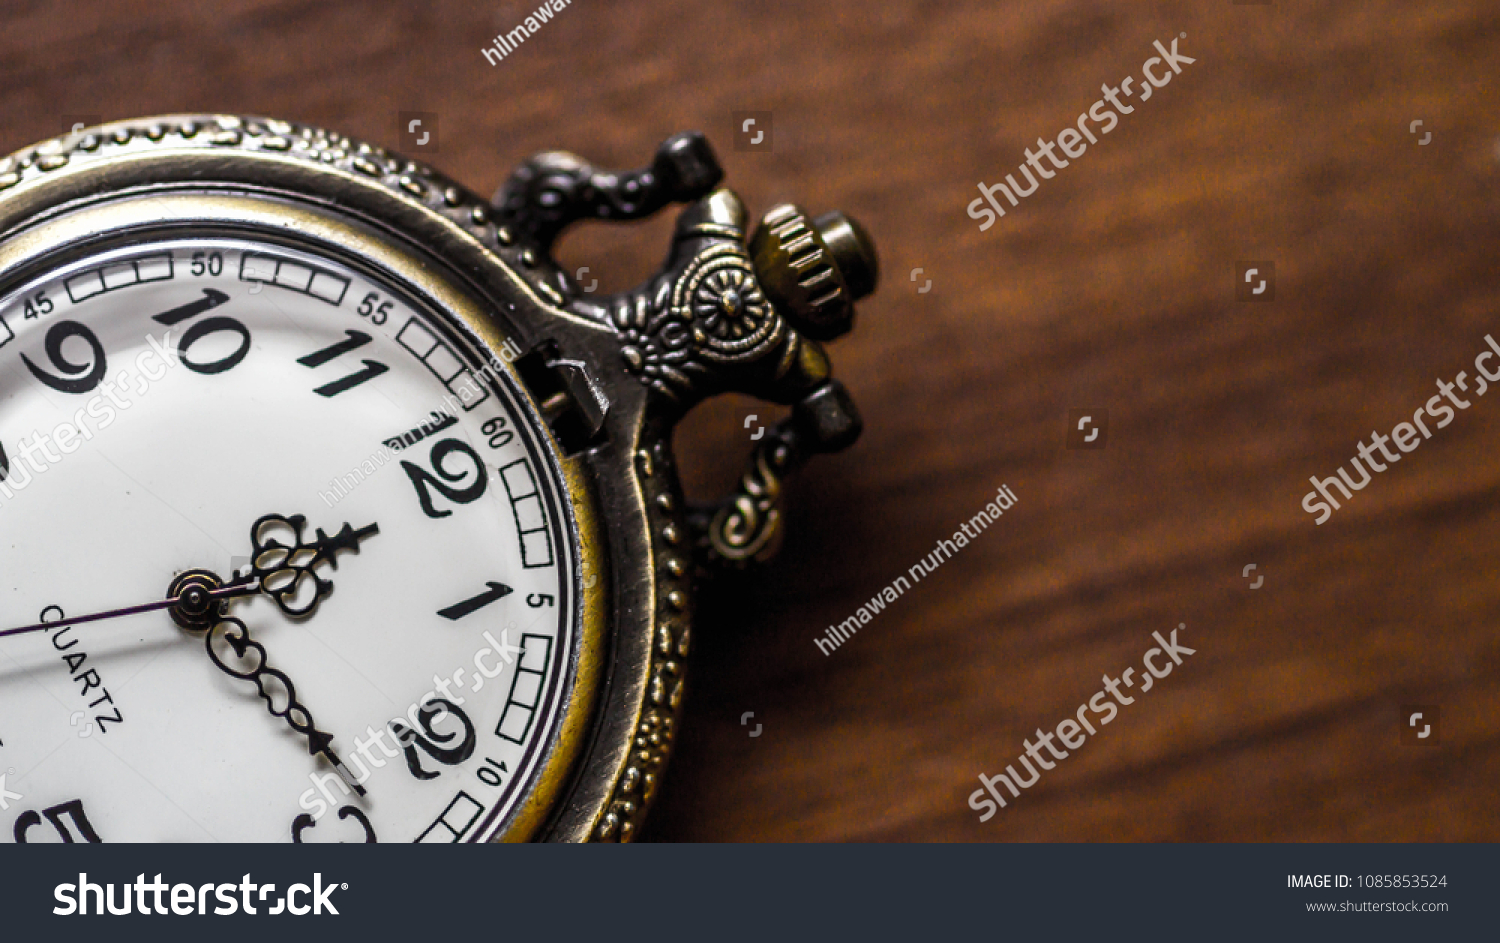 old vintage pocket watch showing time on wooden background #1085853524